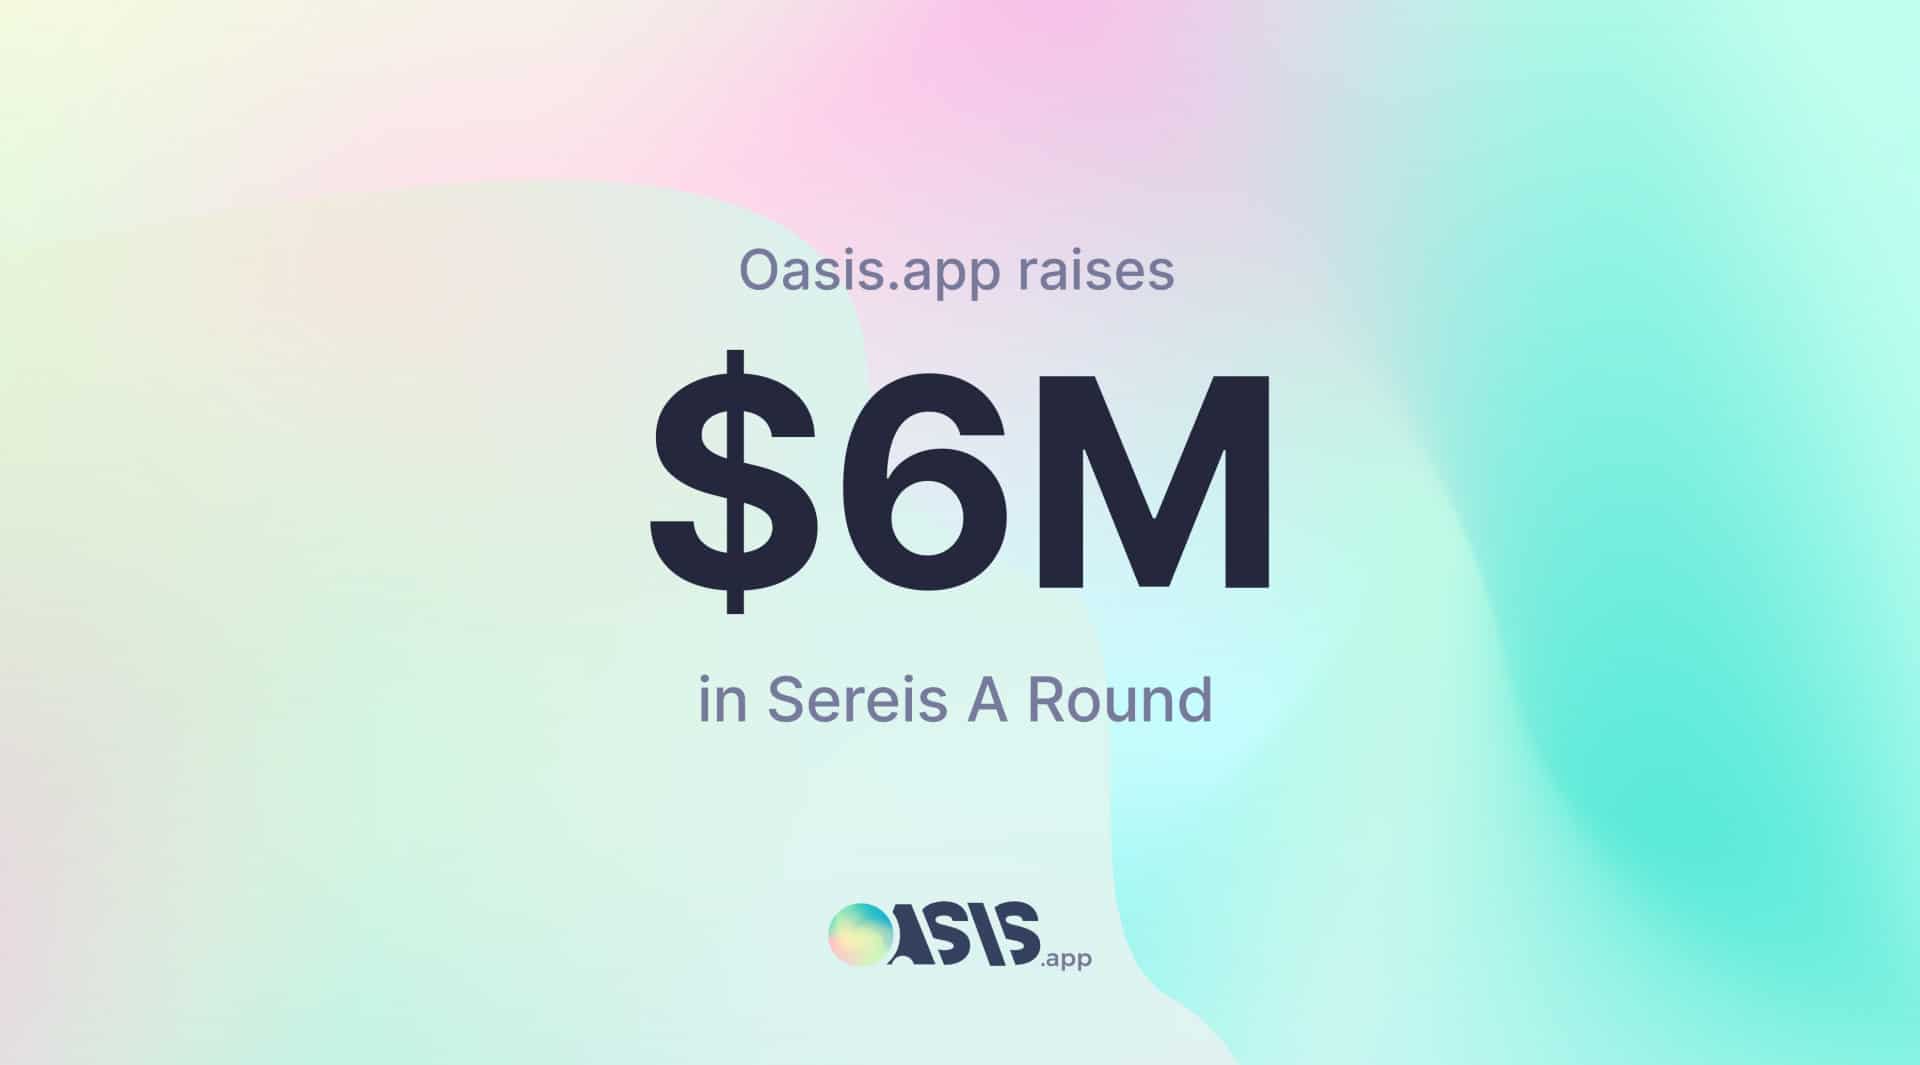 Defi-platform-oasis-app-raises-$6m-in-series-a-round